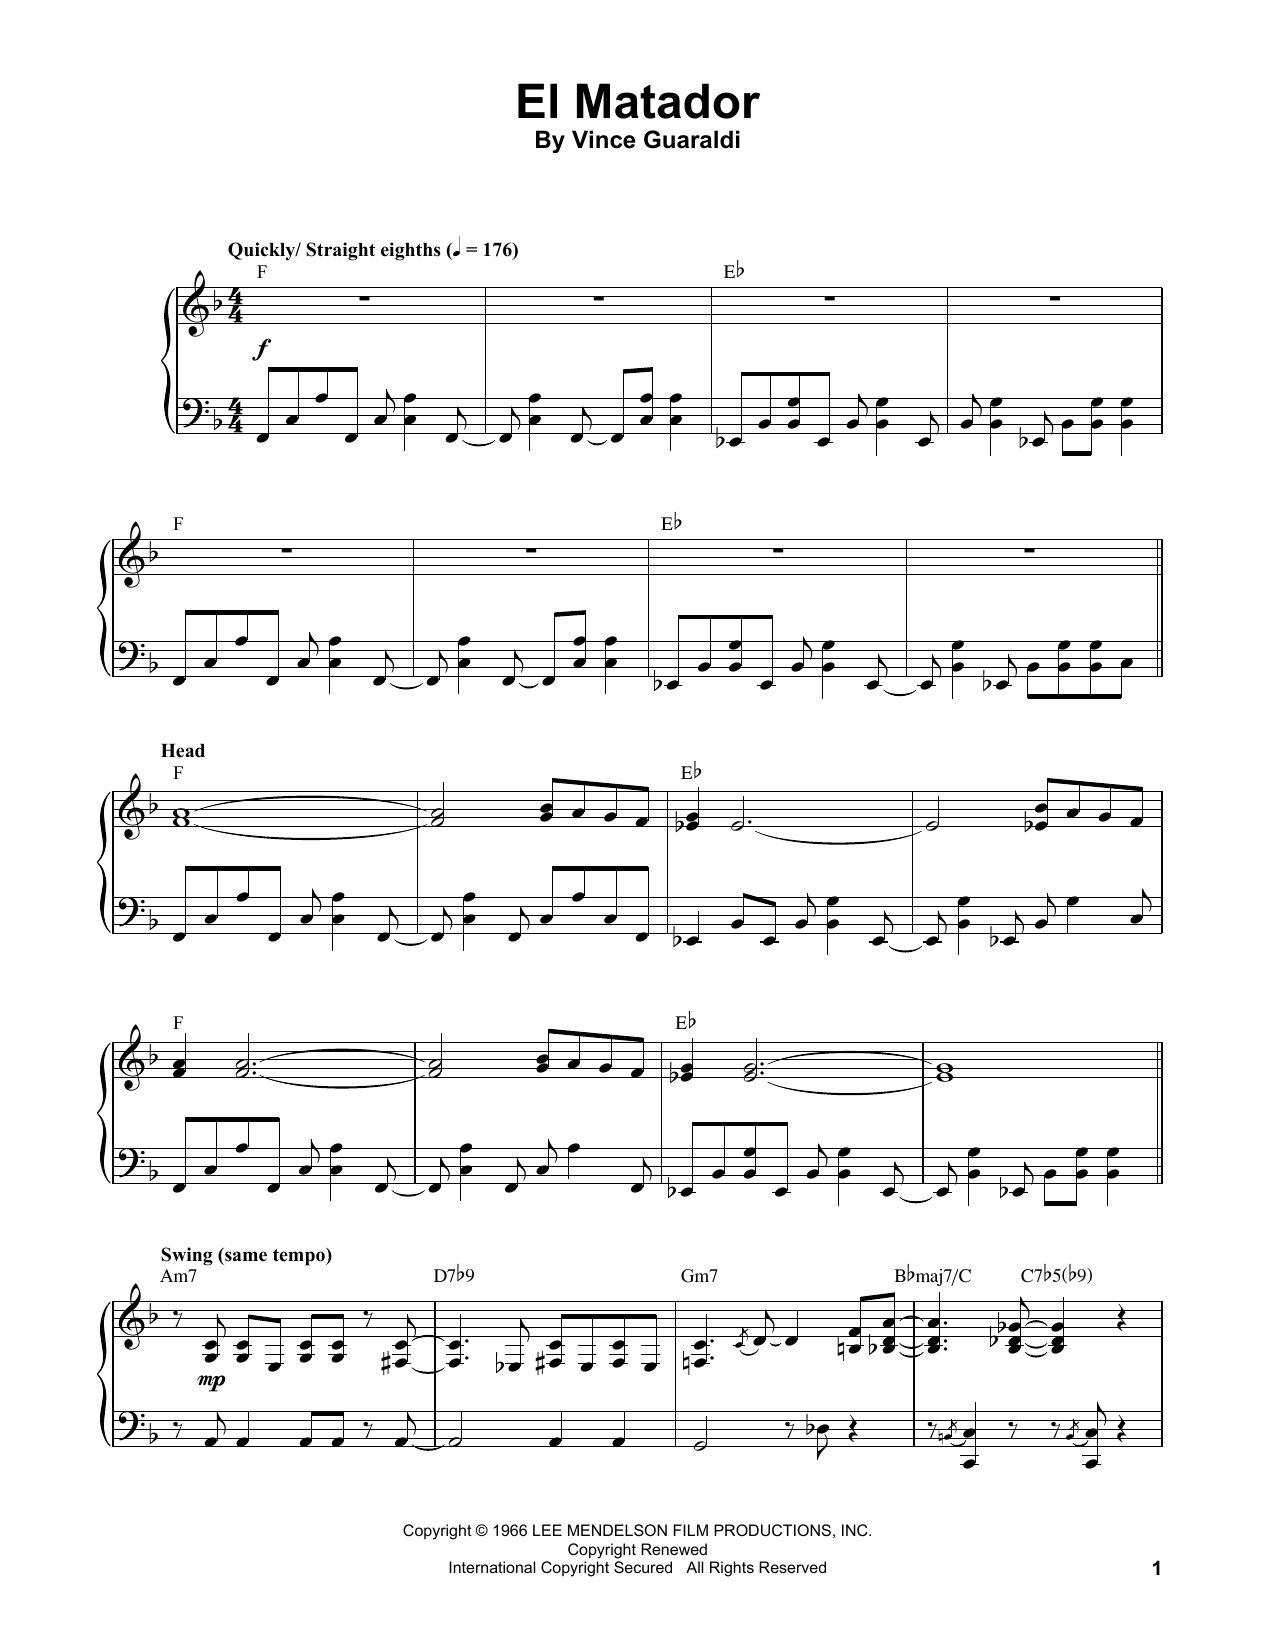 Download Vince Guaraldi El Matador Sheet Music and learn how to play Piano Transcription PDF digital score in minutes